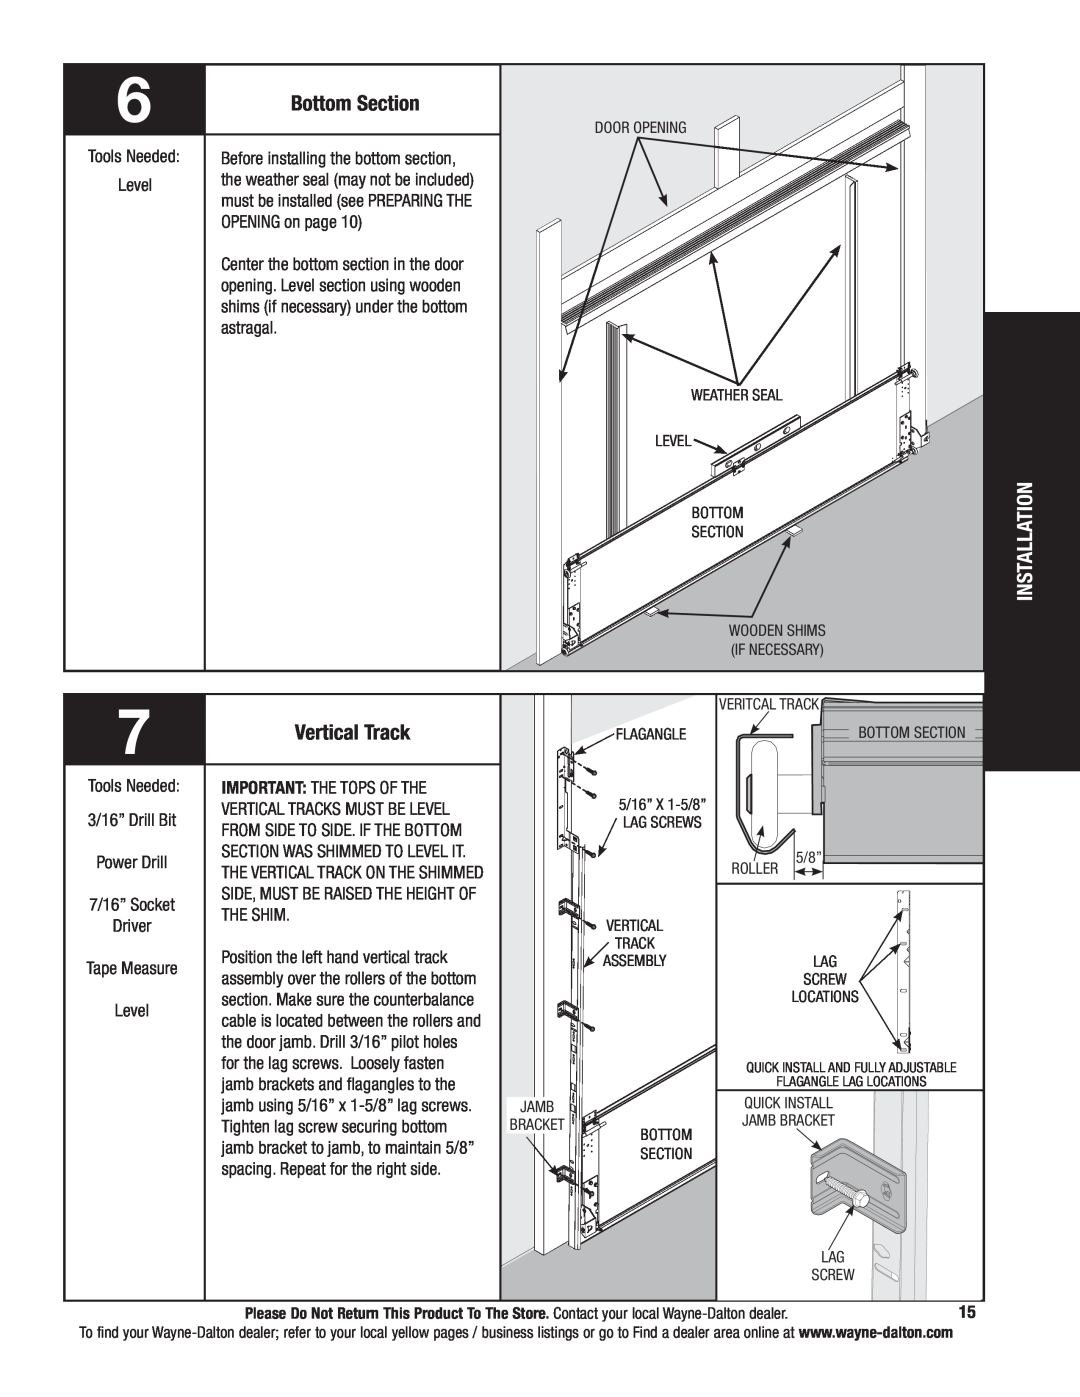 Wayne-Dalton 341785 installation instructions Bottom Section, Vertical Track, Installation 